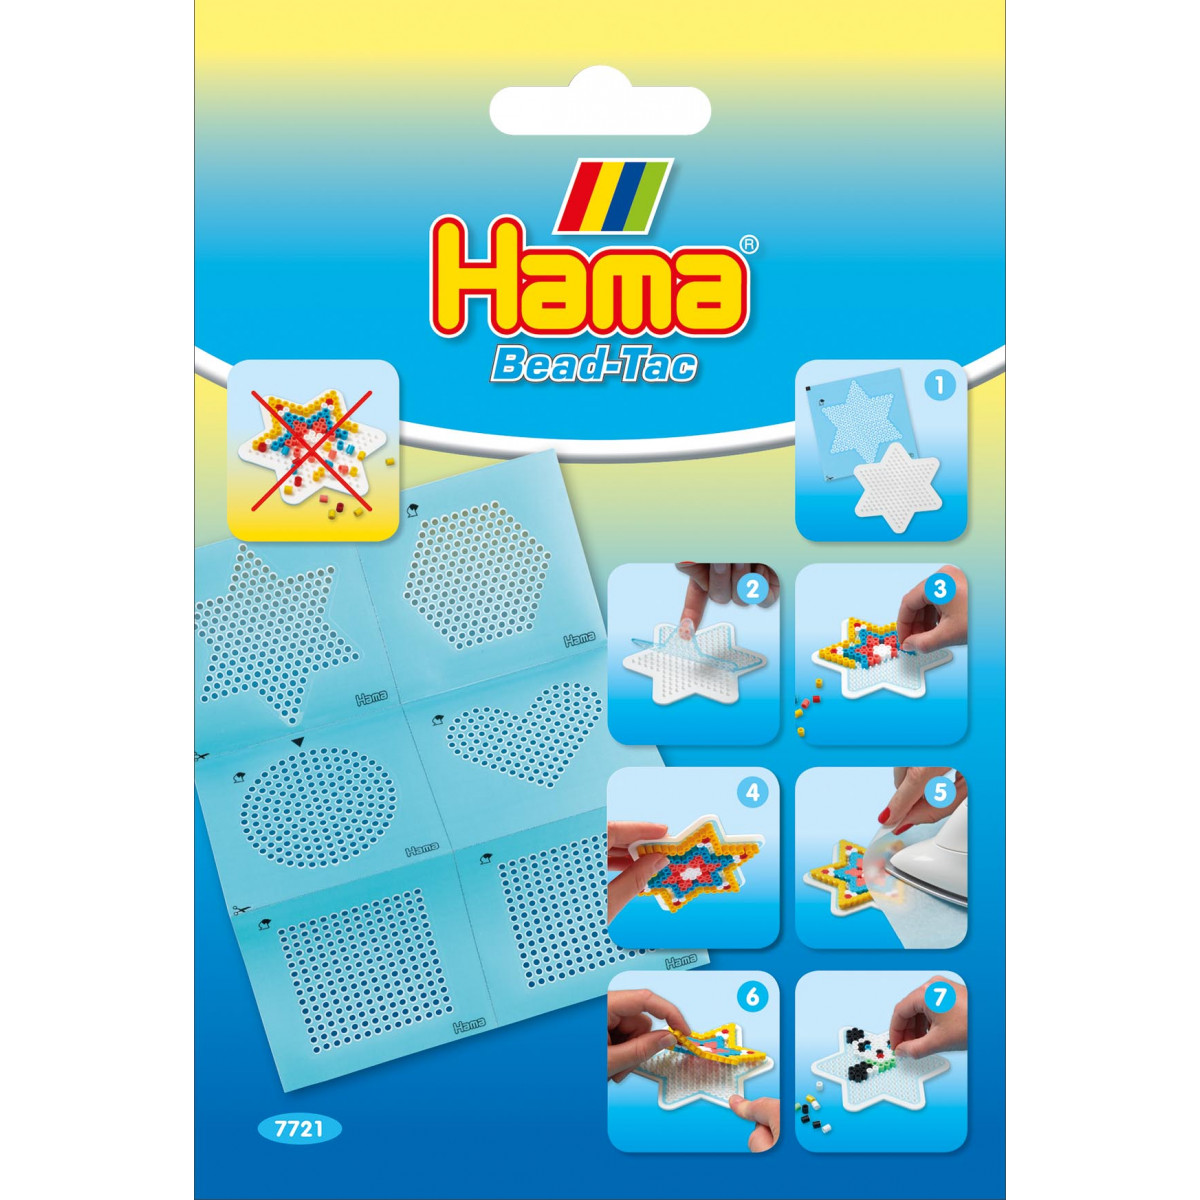 Hama Midi Packung 7721 Bead-Tac Haftfolien - 6 Stk 